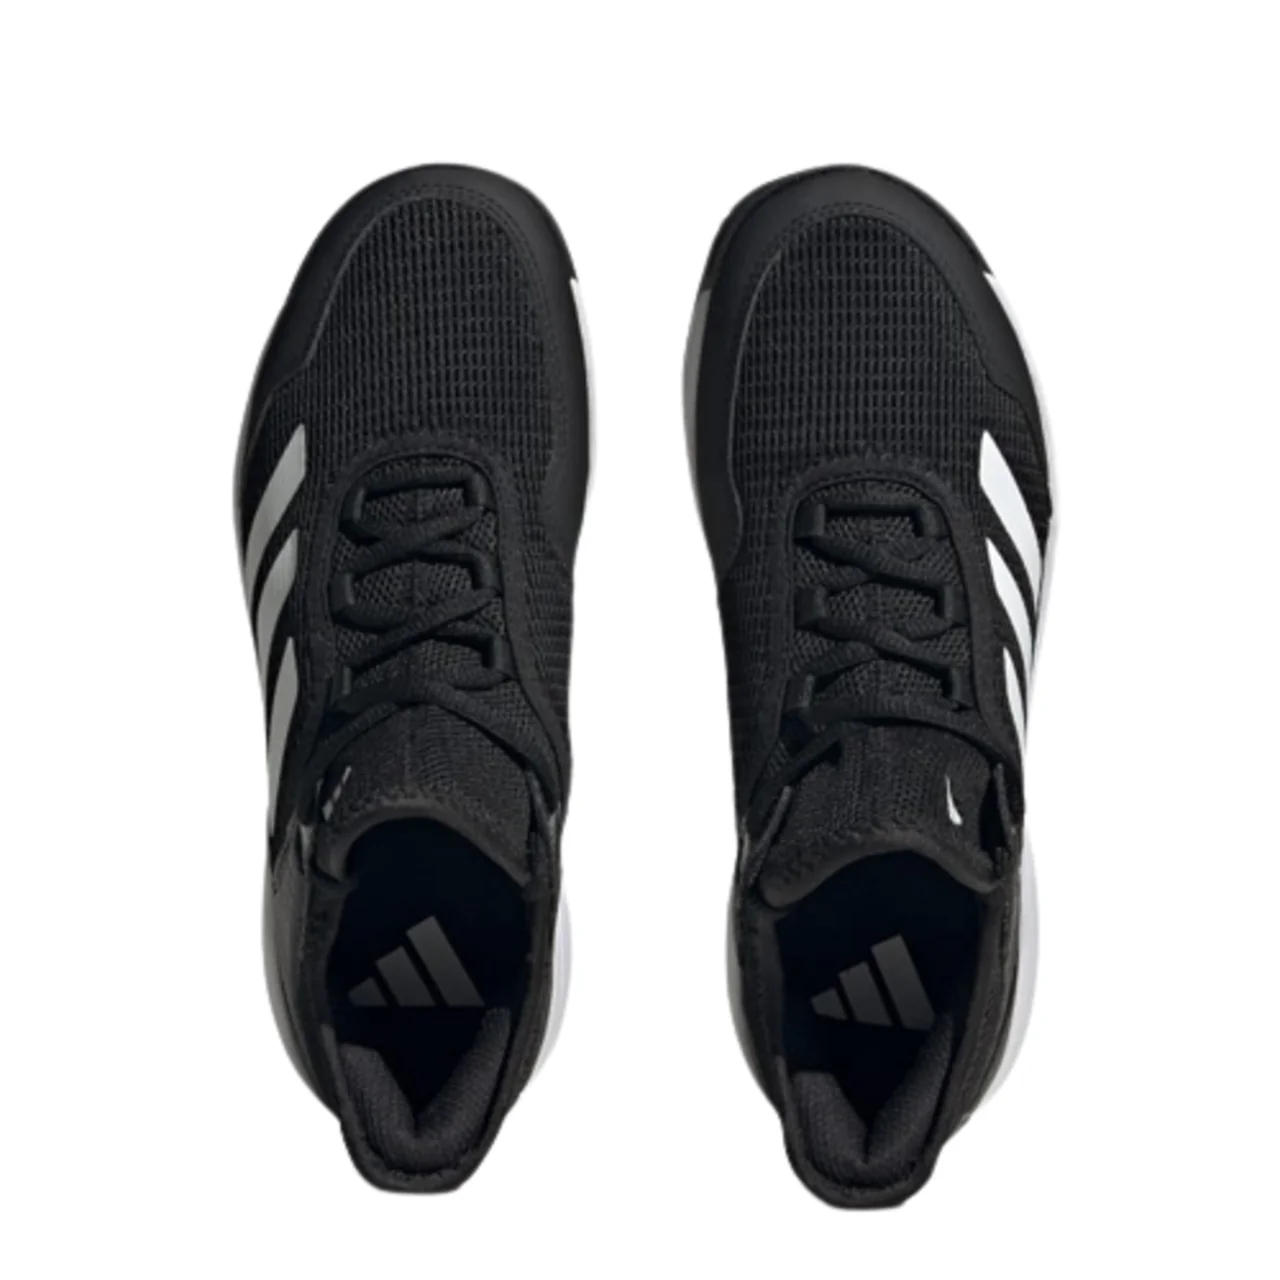 Adidas Ubersonic 4k Junior Black